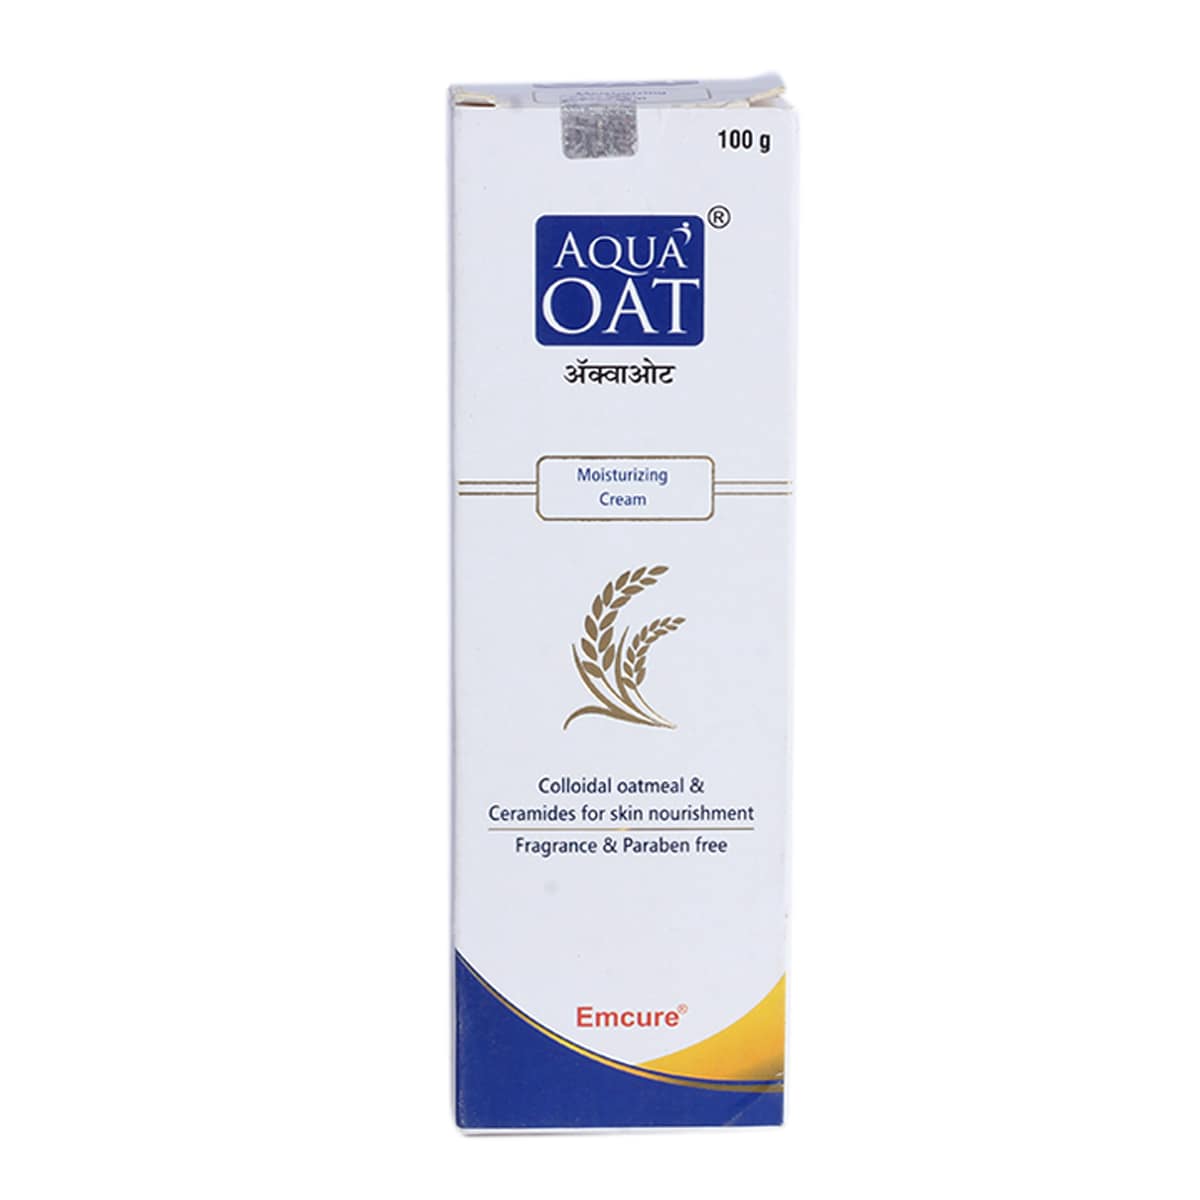 Buy Aqua Oat Moisturizing Cream 100 gm | Colloidal Oats & ceramides | For Skin Nourishment Online